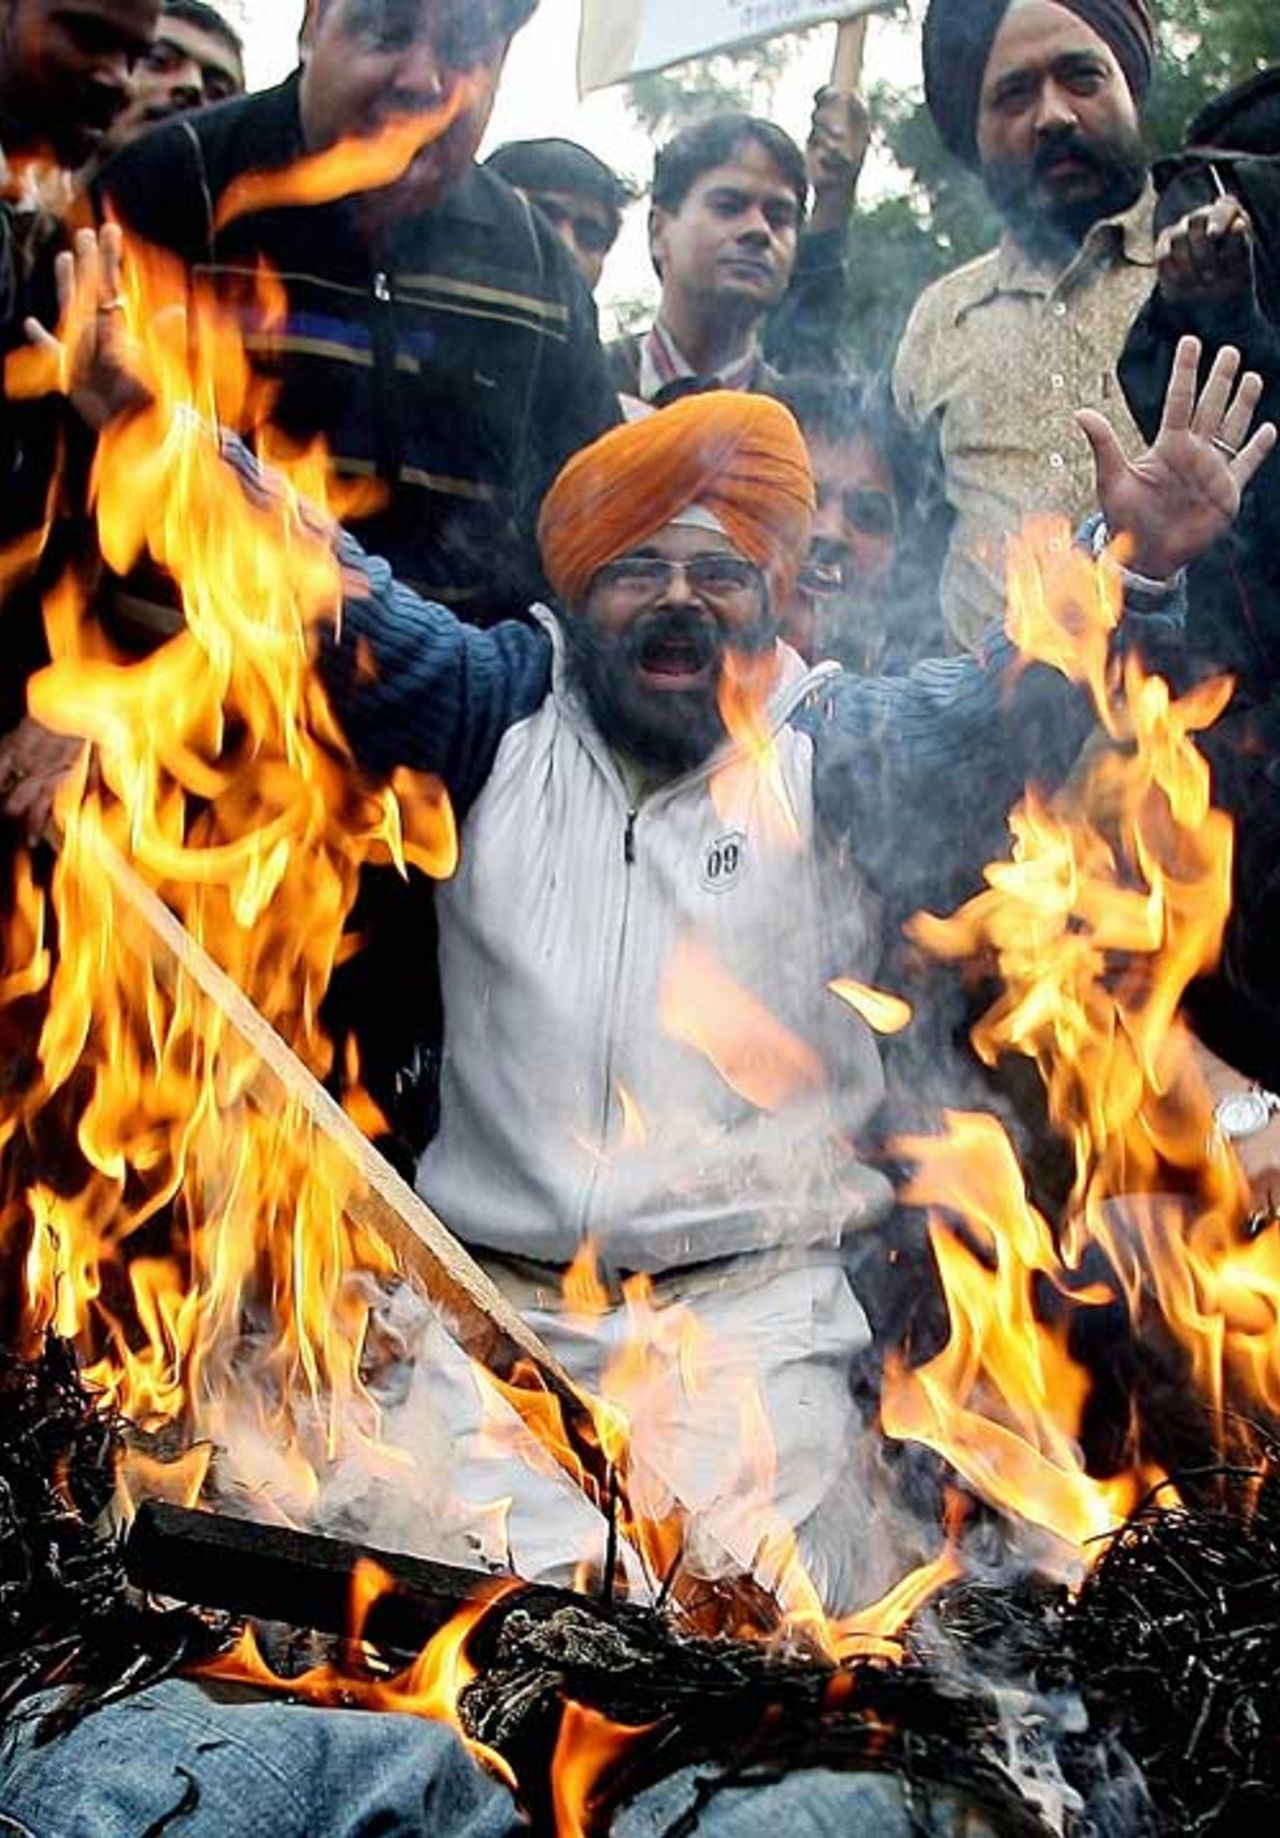 Indian fans burn effigies in the streets following events in Australia, New Delhi, January 7, 2008